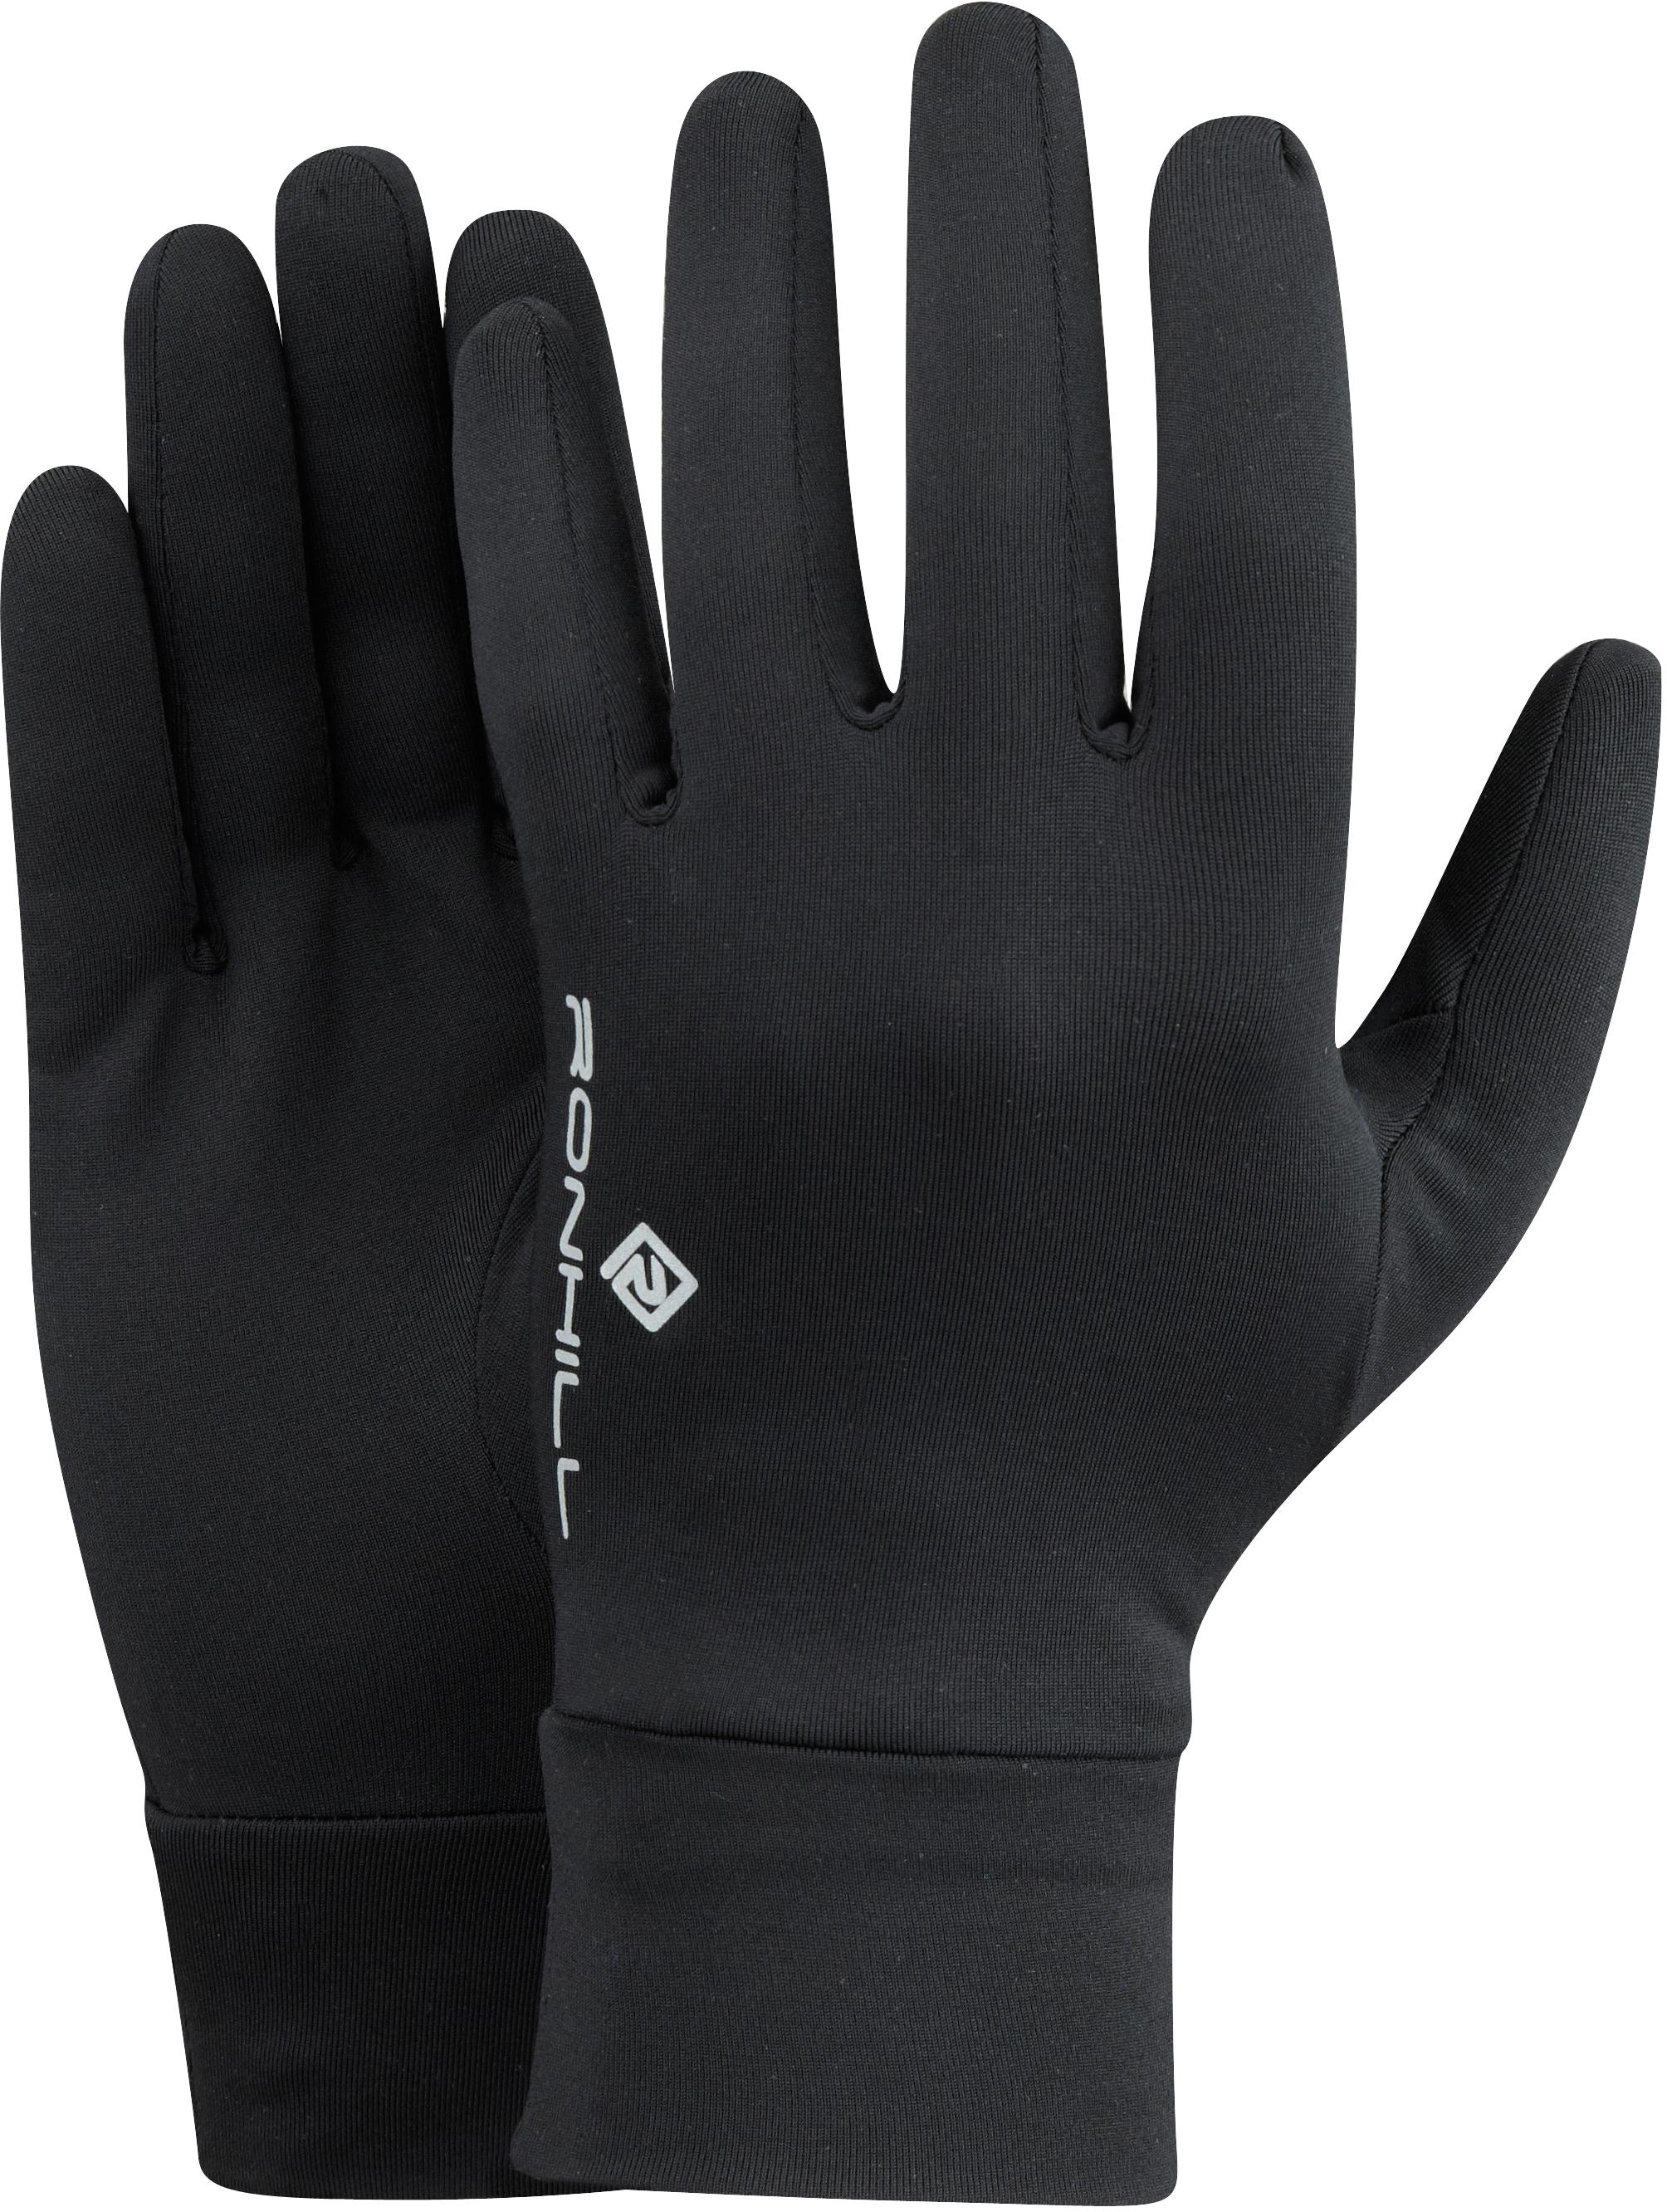 Ronhill Classic Glove - Black